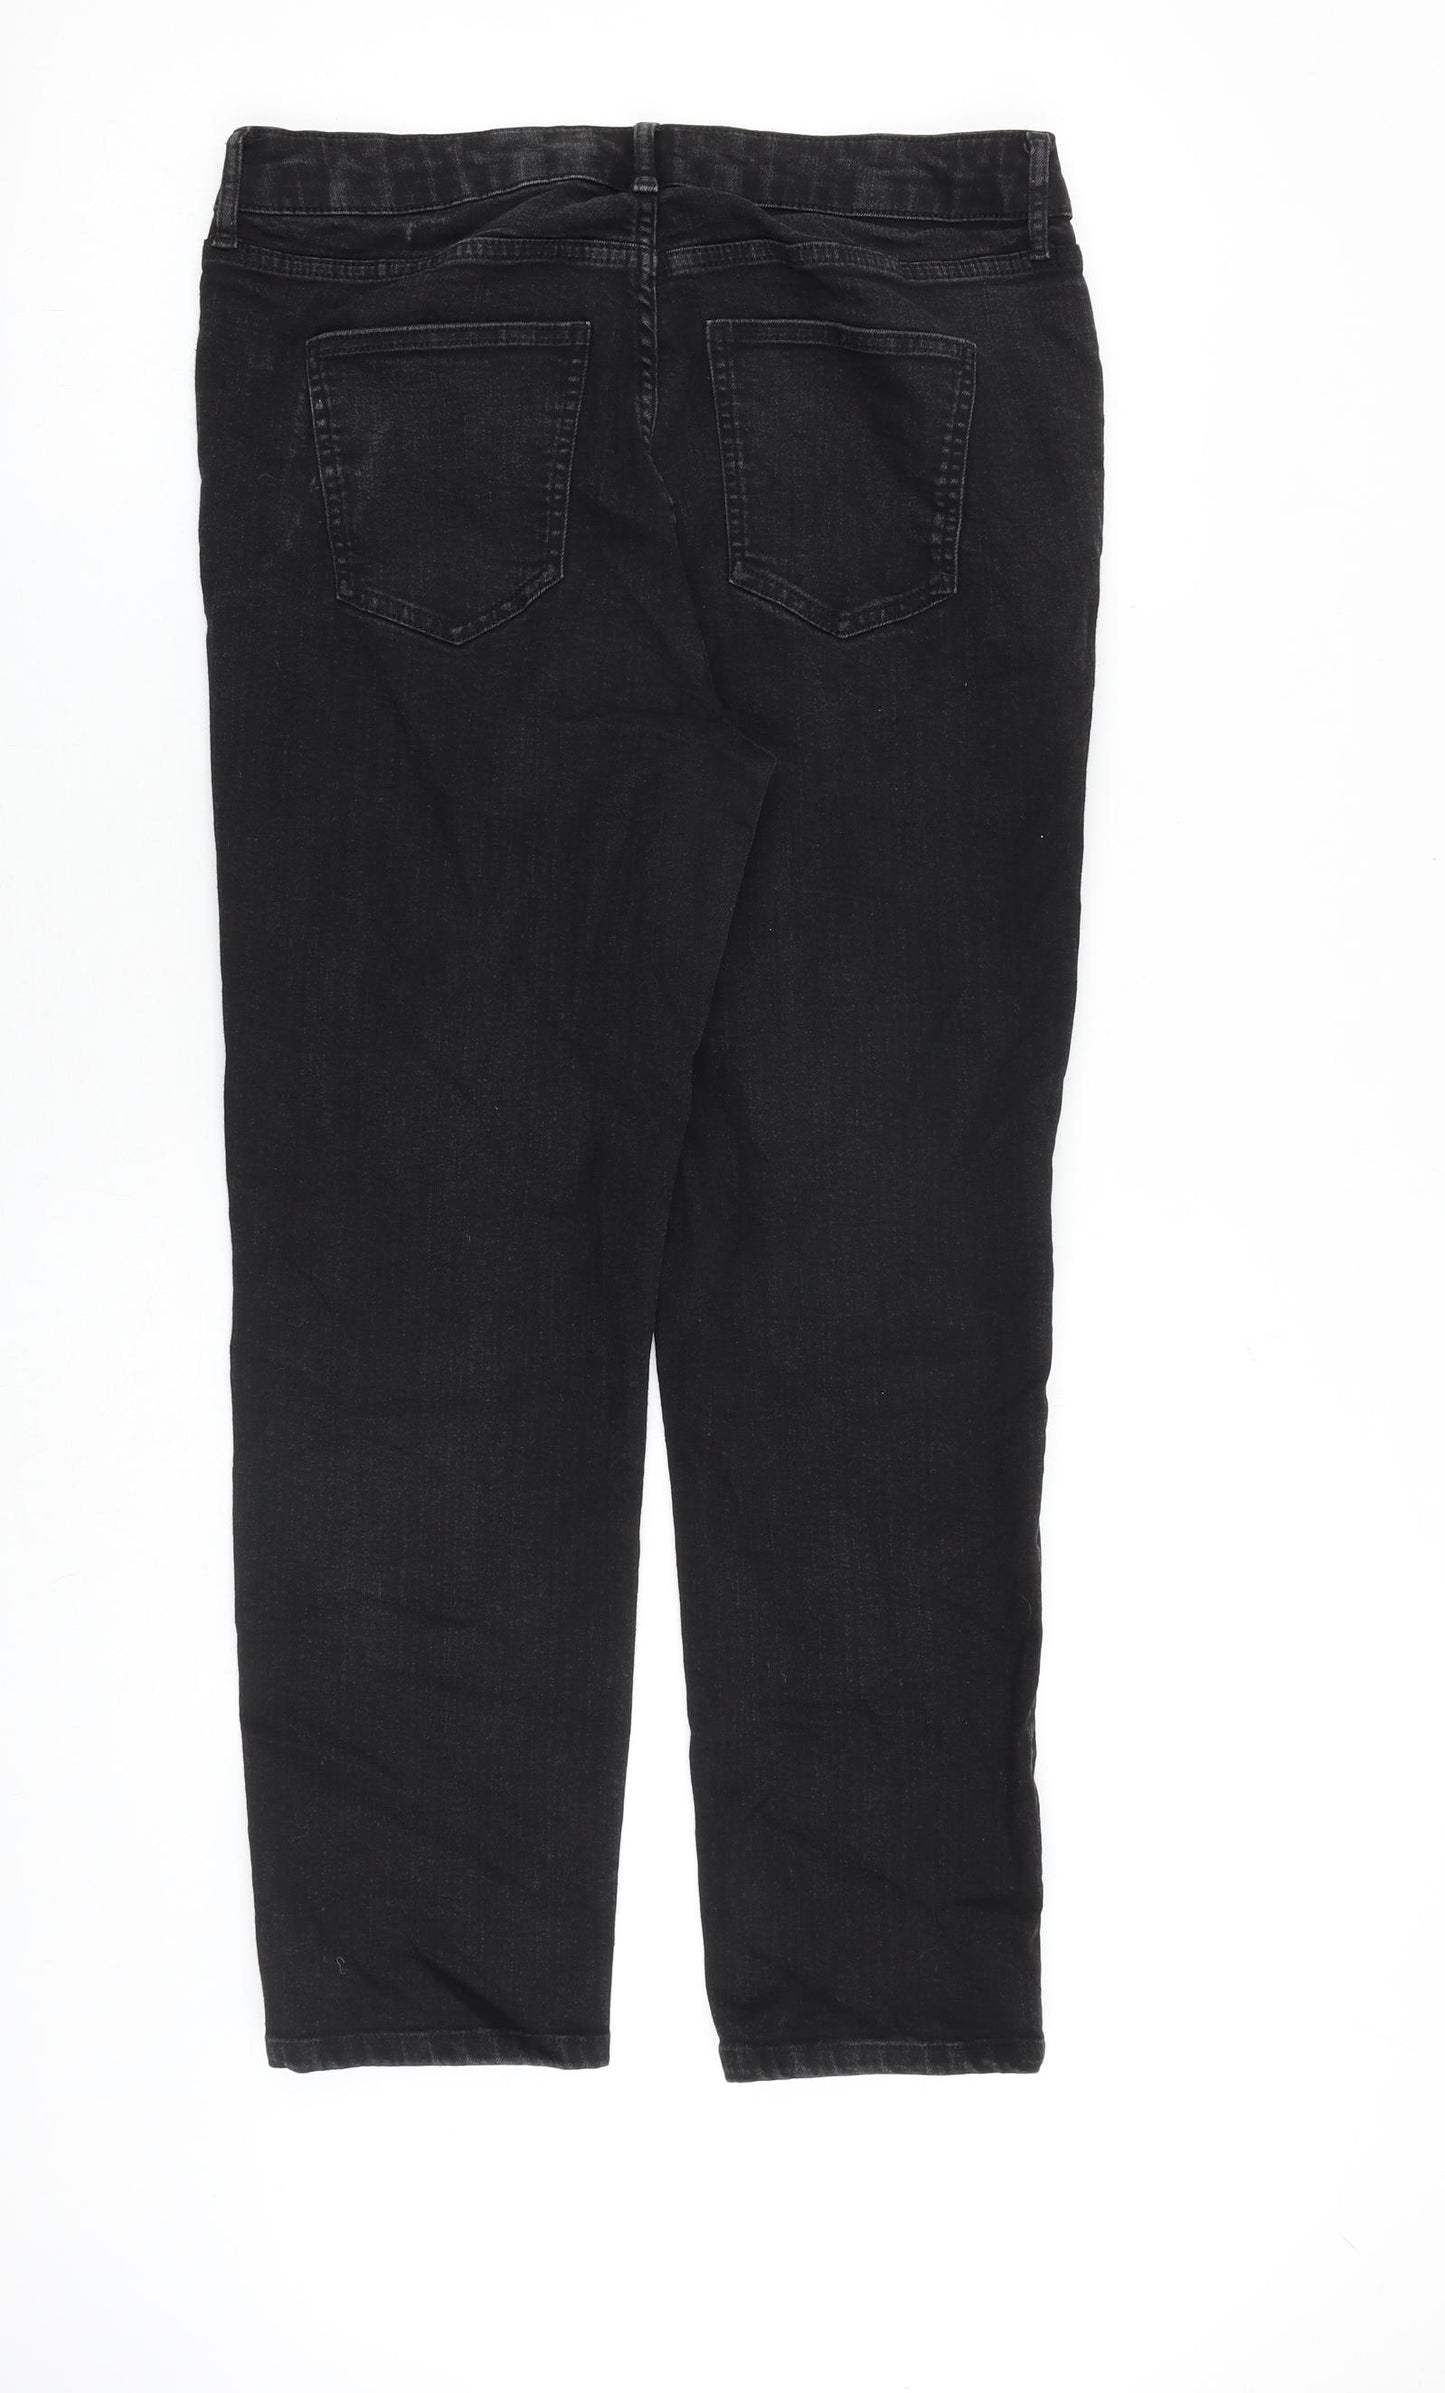 Boden Womens Black Cotton Straight Jeans Size 16 L27 in Regular Zip